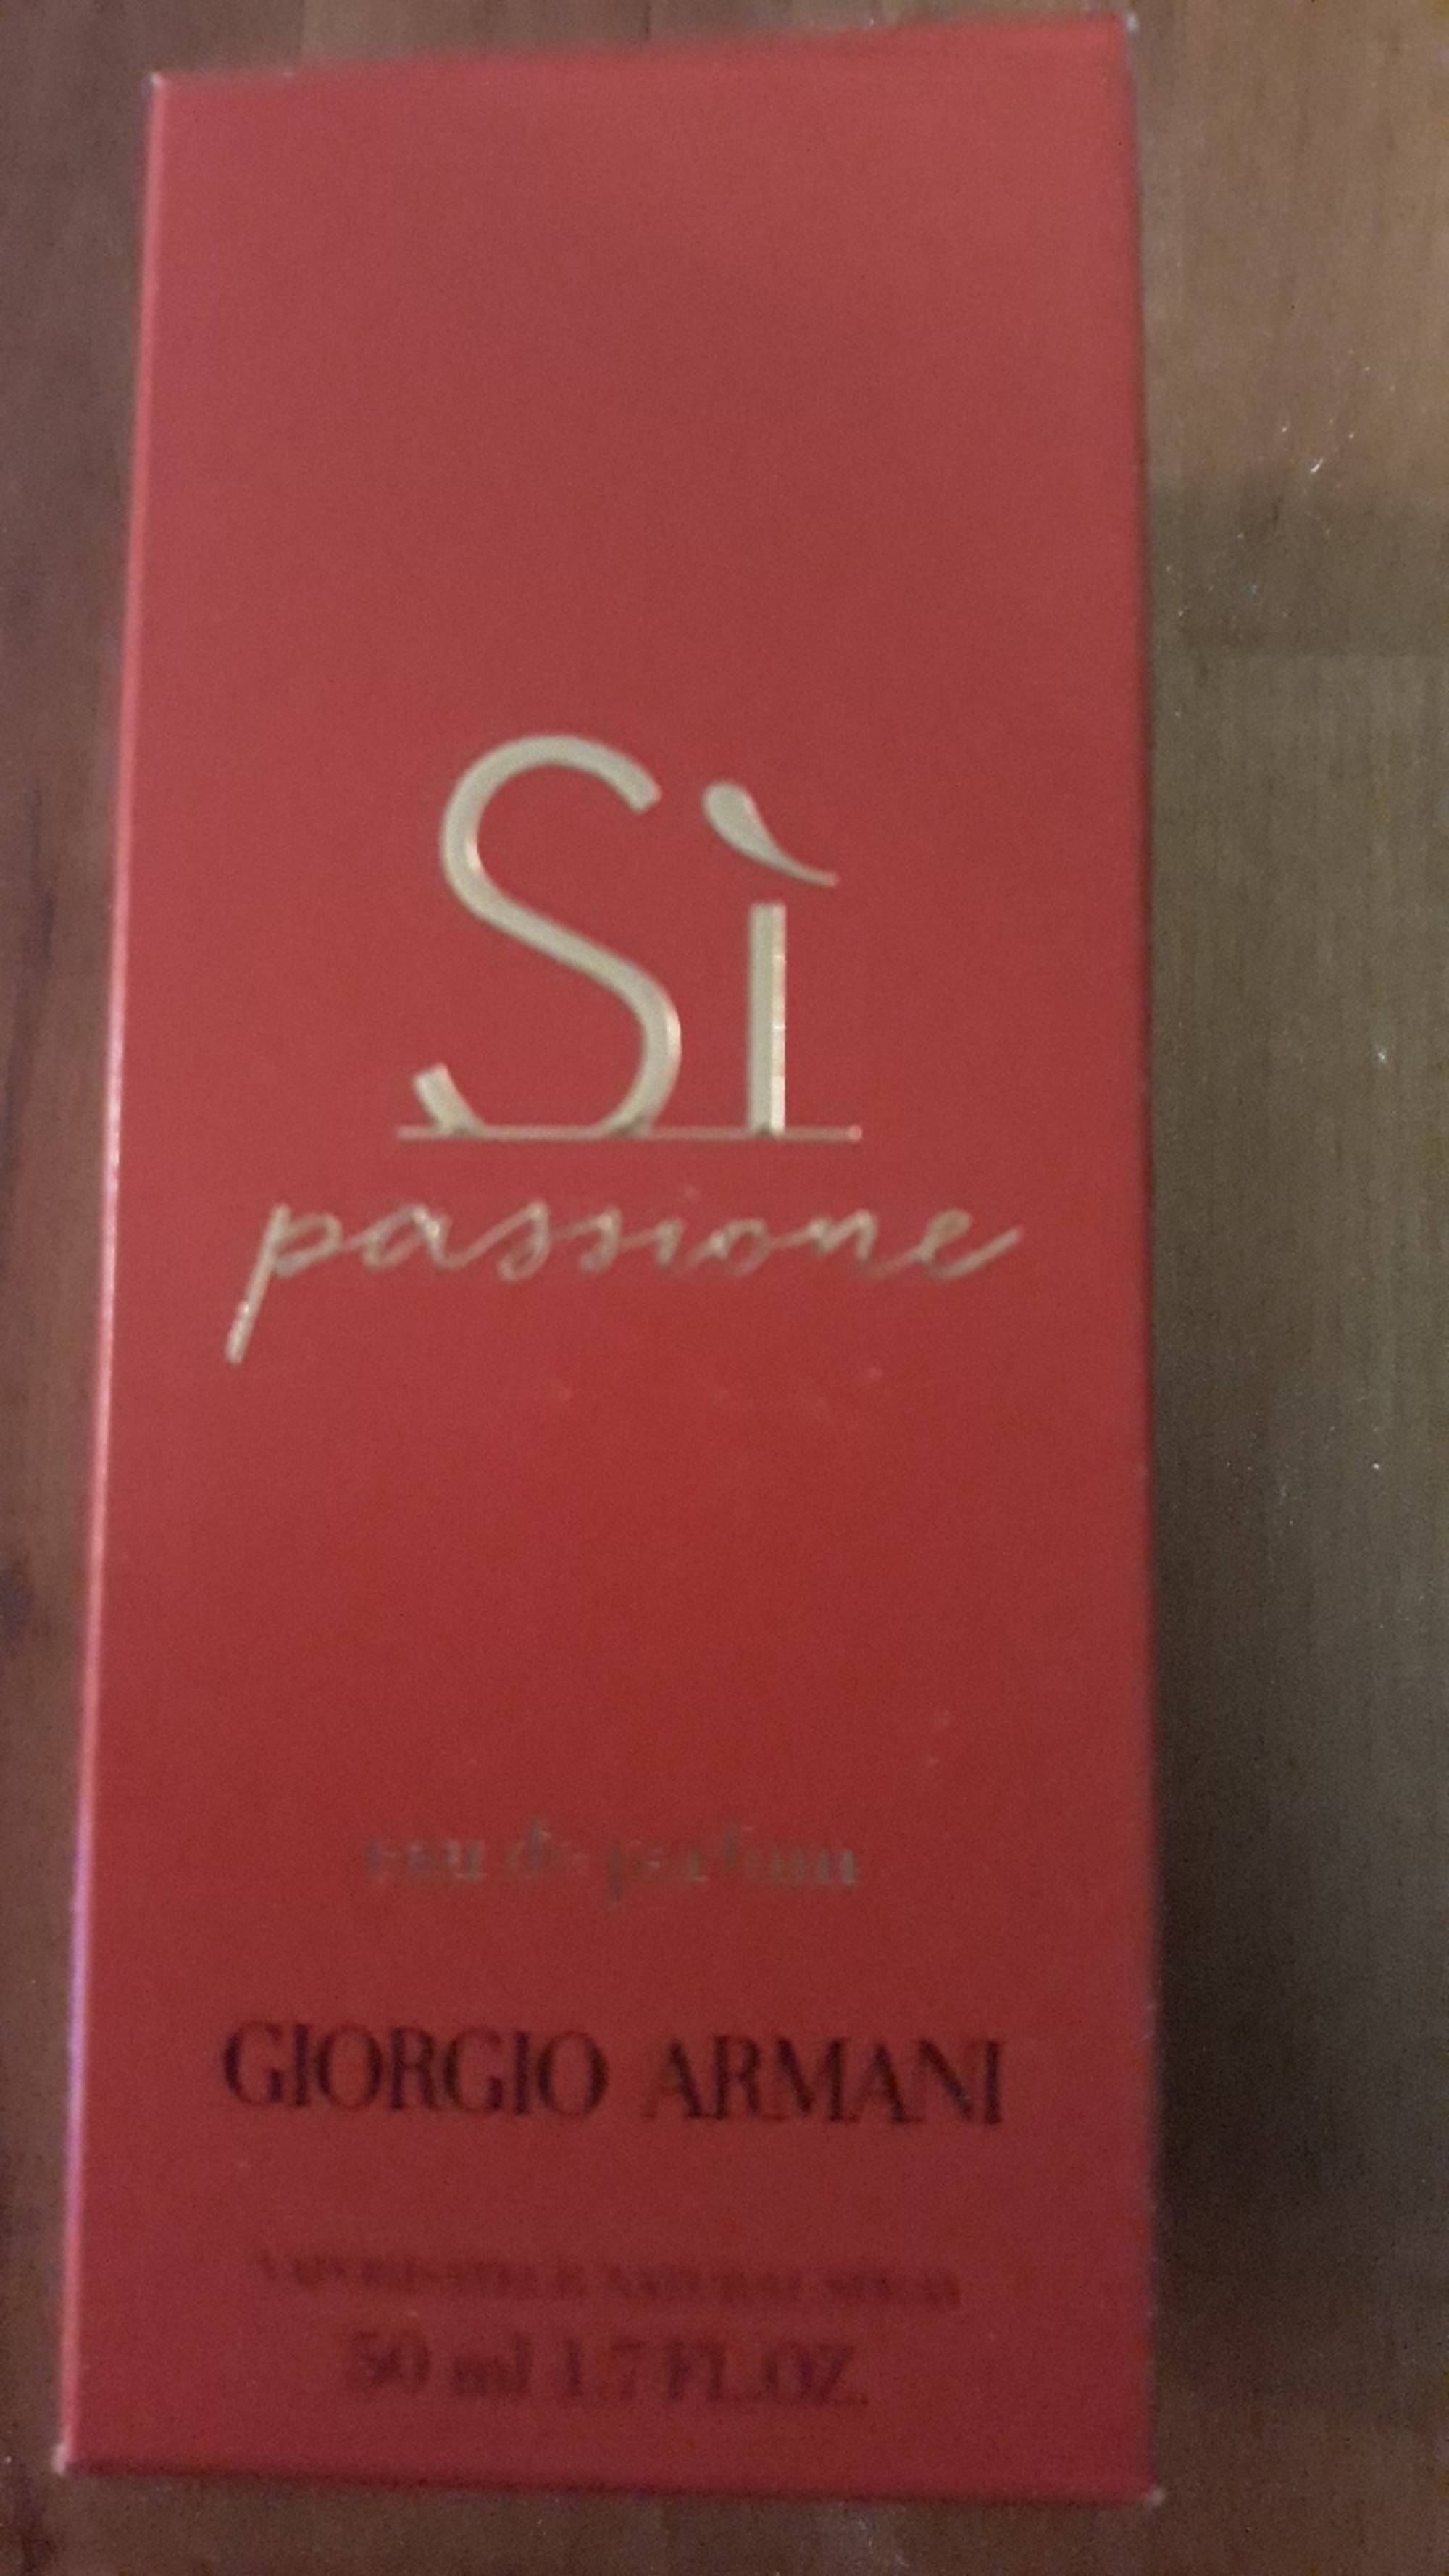 GIORGIO ARMANI - Si passione - Eau de parfum